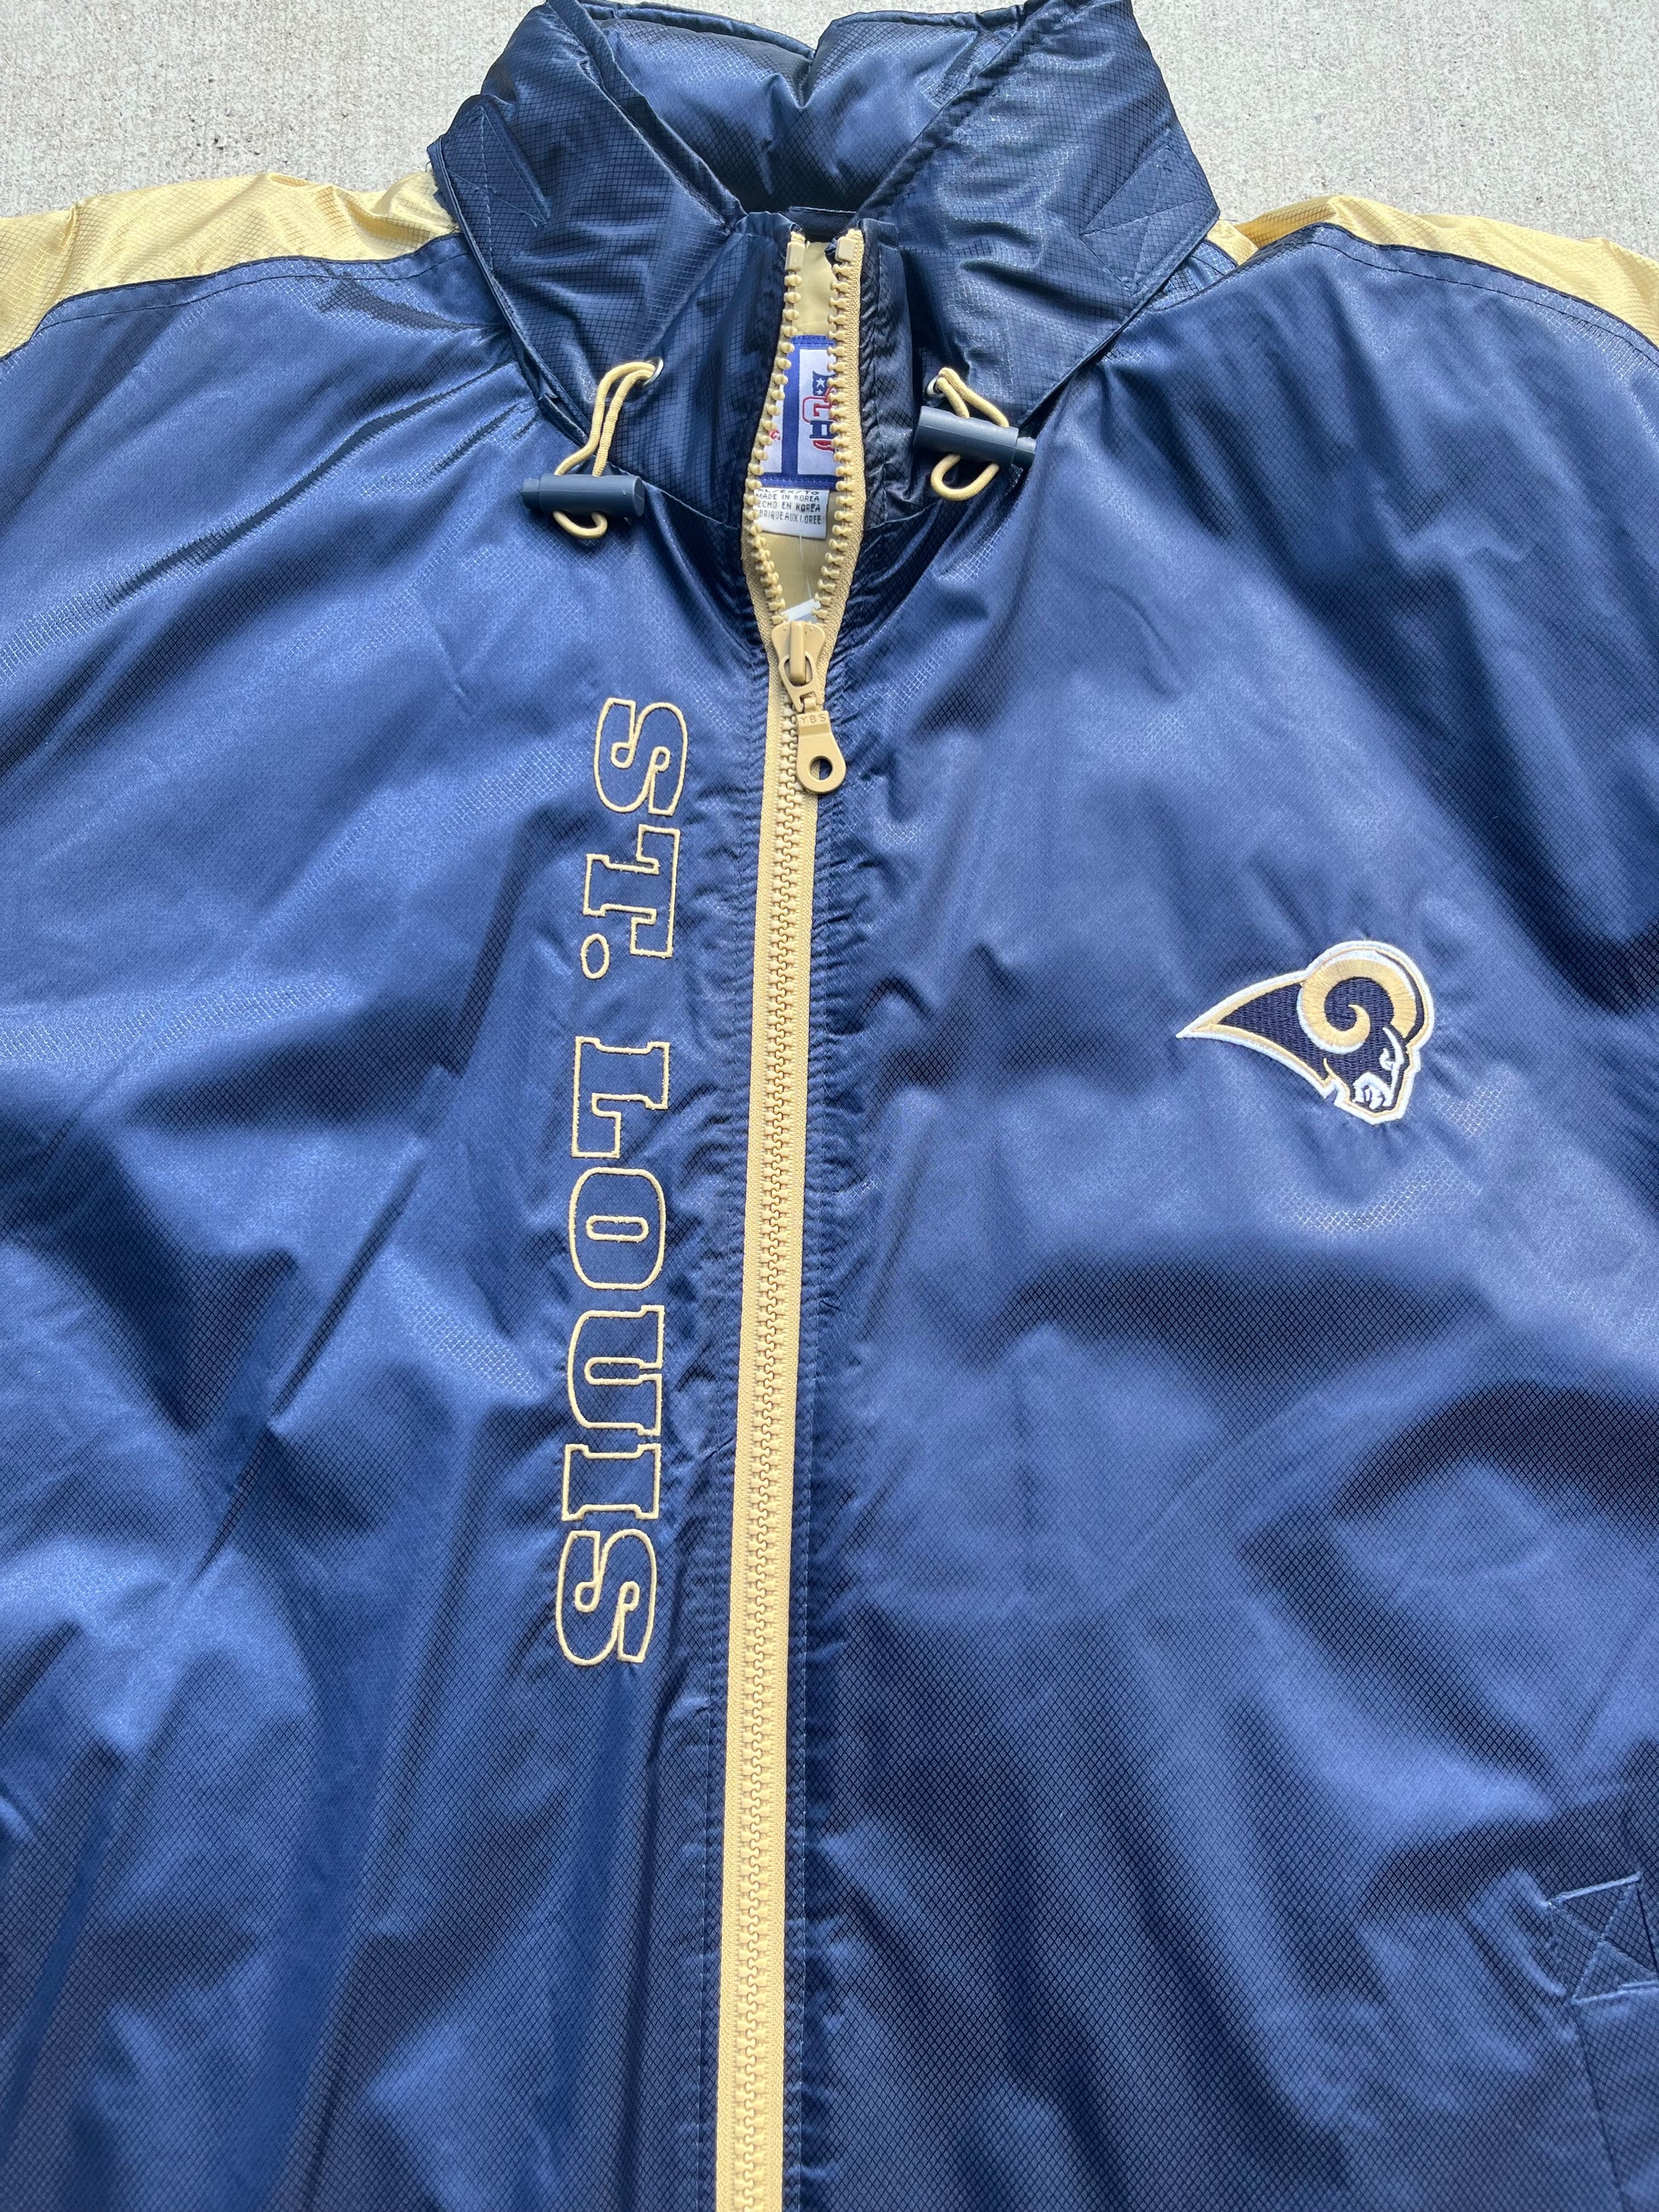 St. Louis Rams Jacket